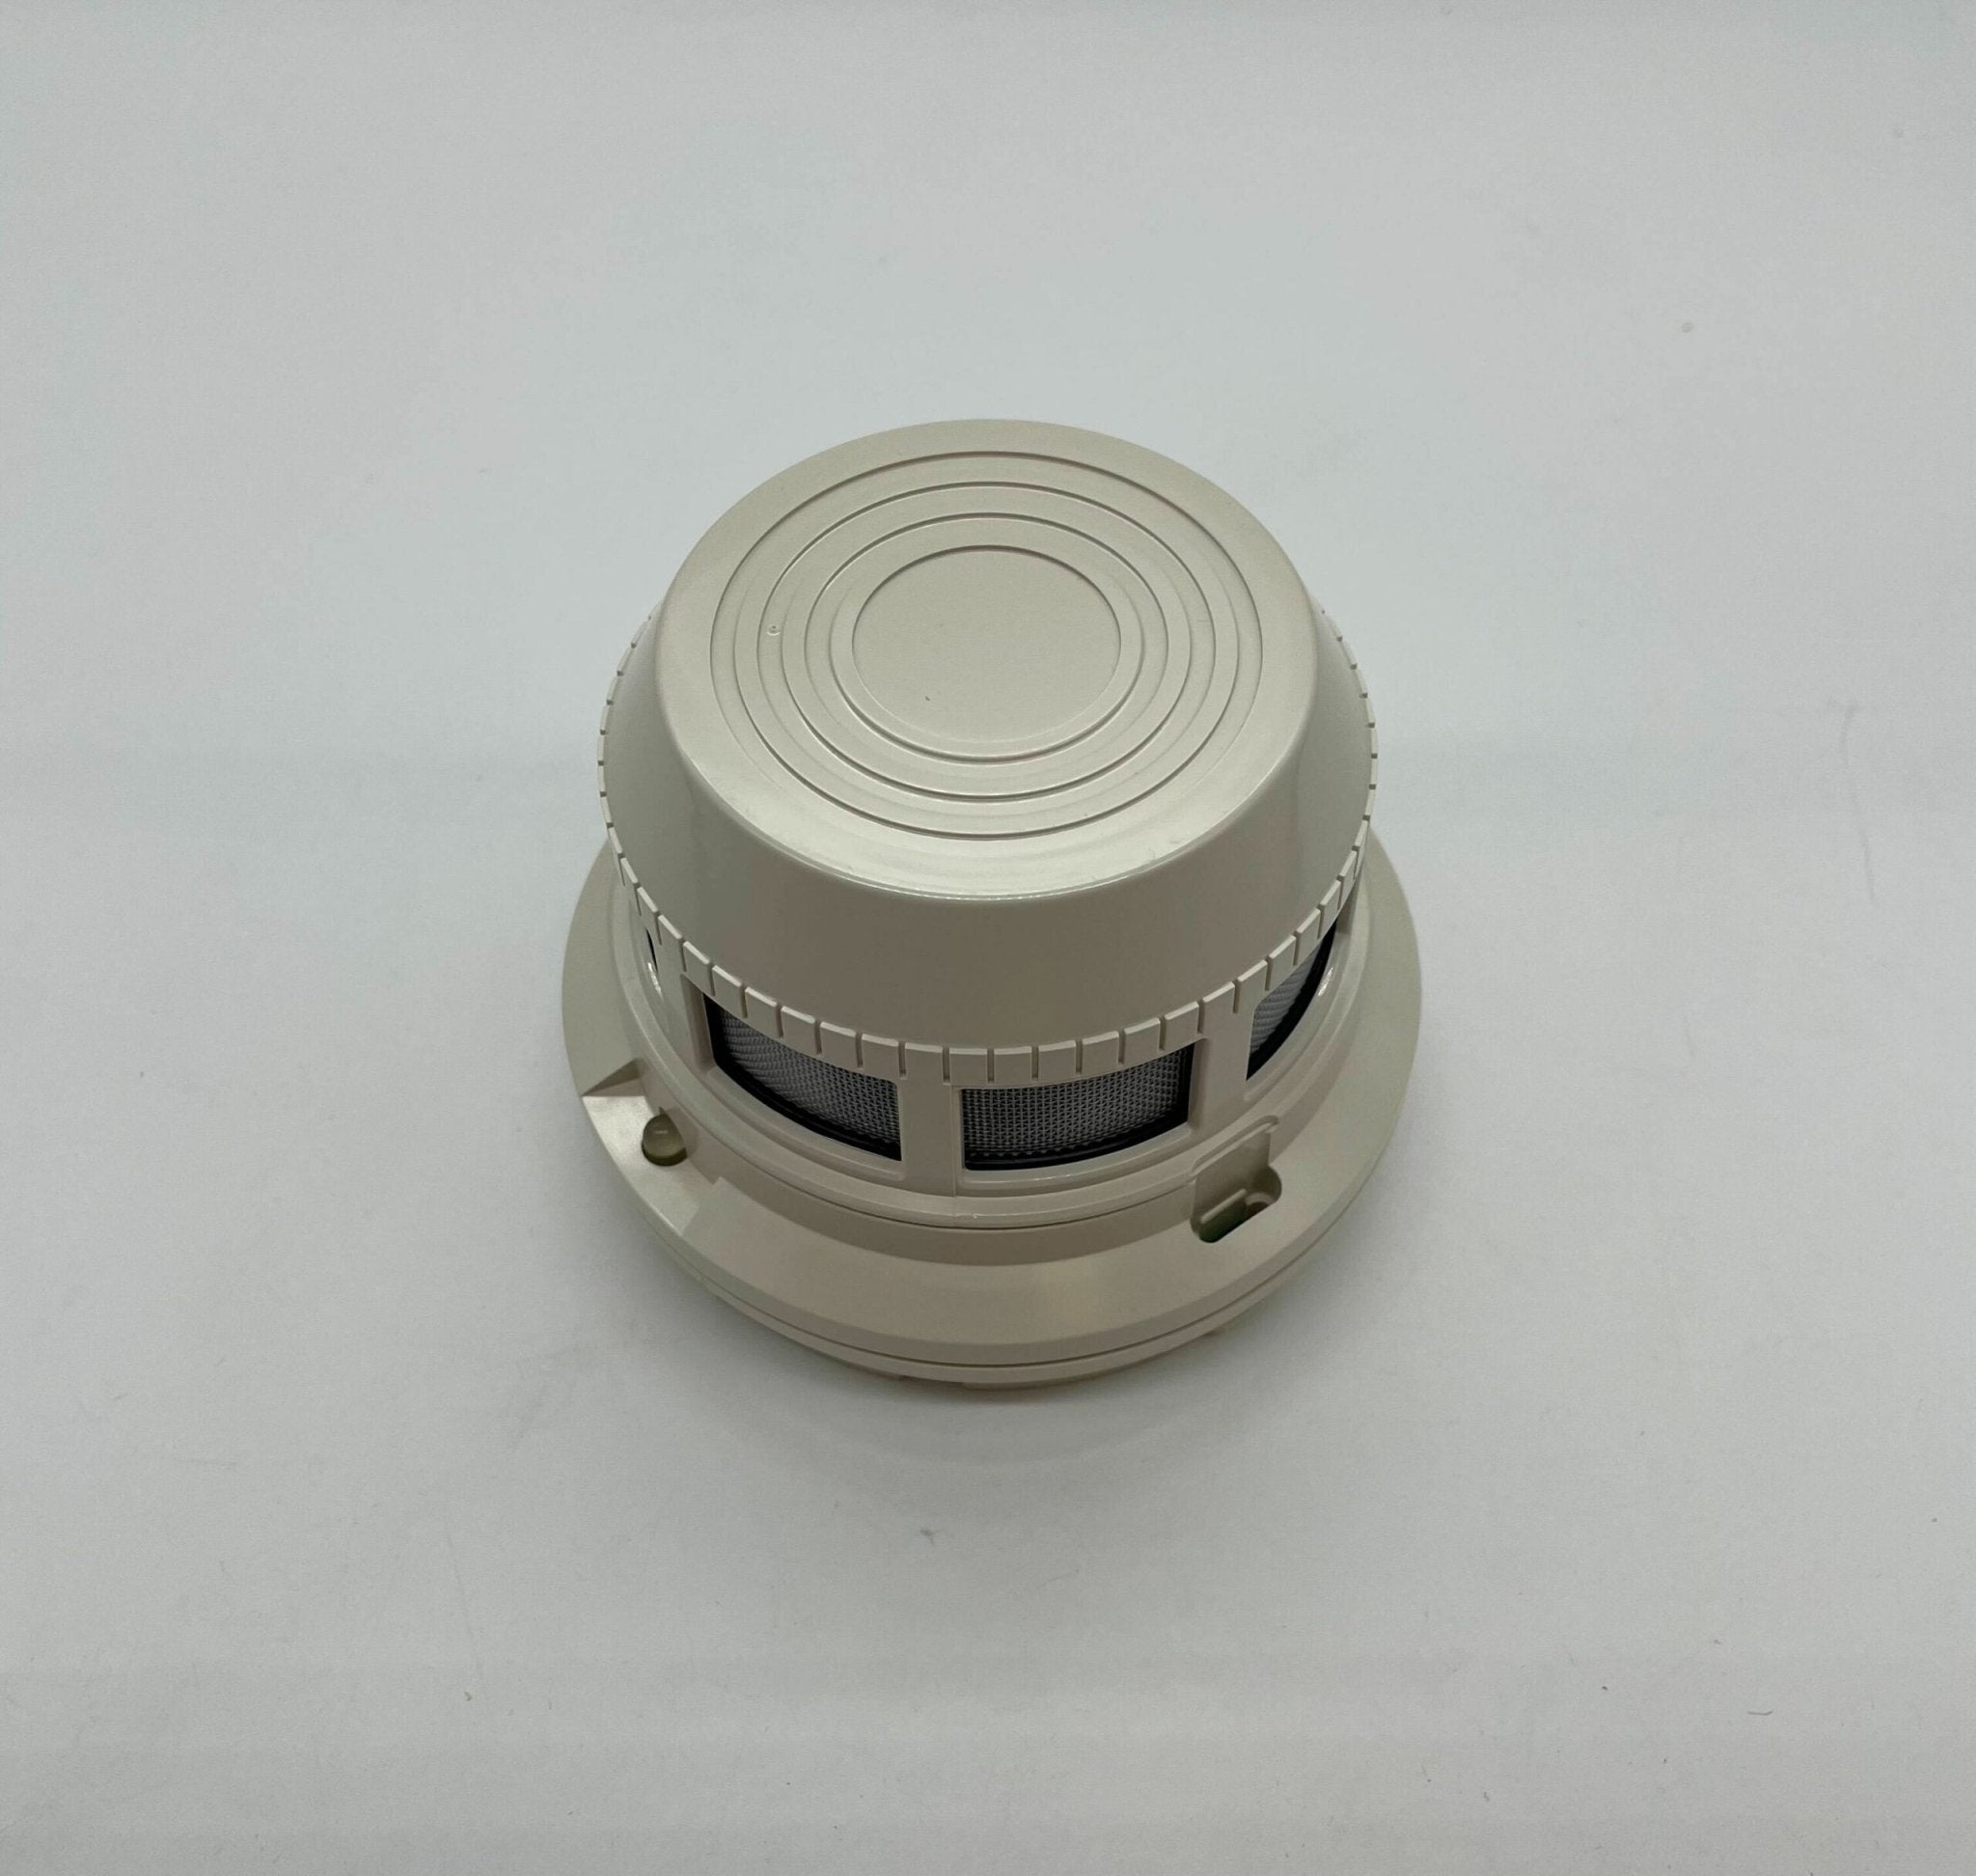 System Sensor 2551HR - The Fire Alarm Supplier